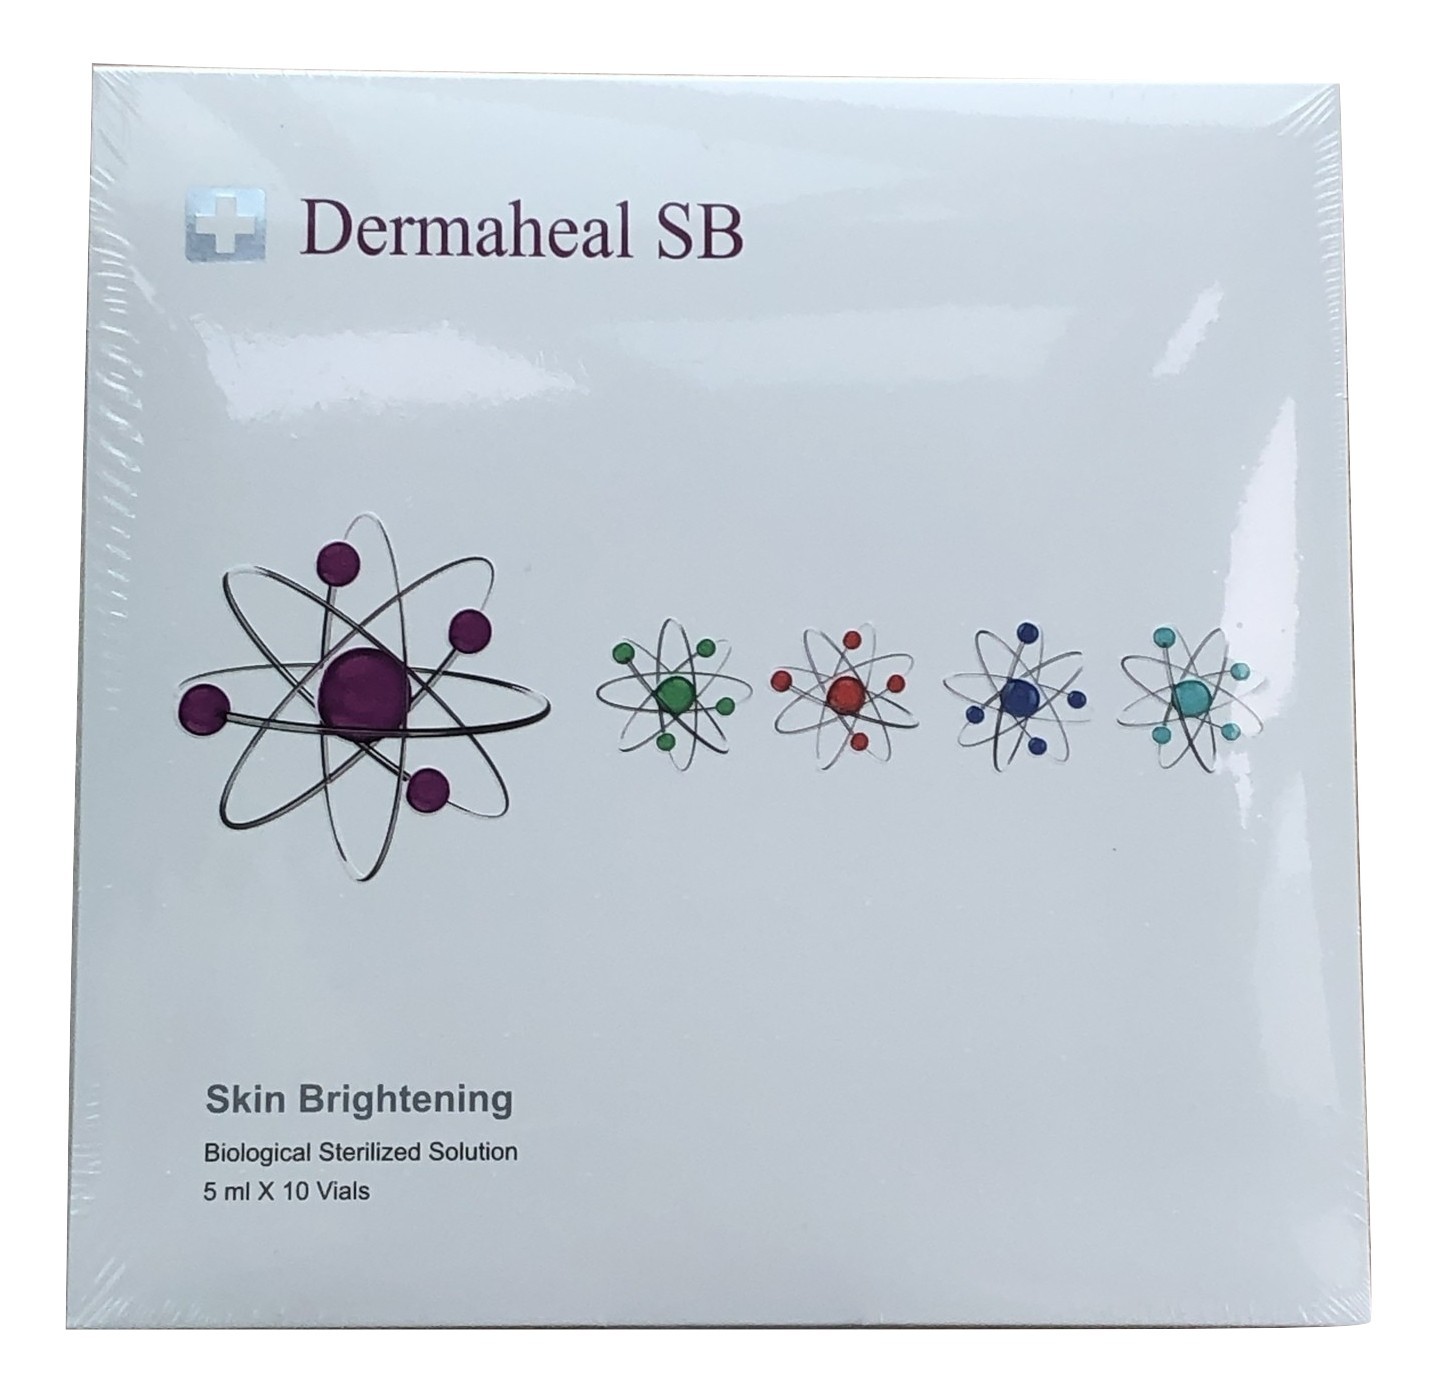 Dermaheal SB - Skin Brightening Biological Sterilized Solution